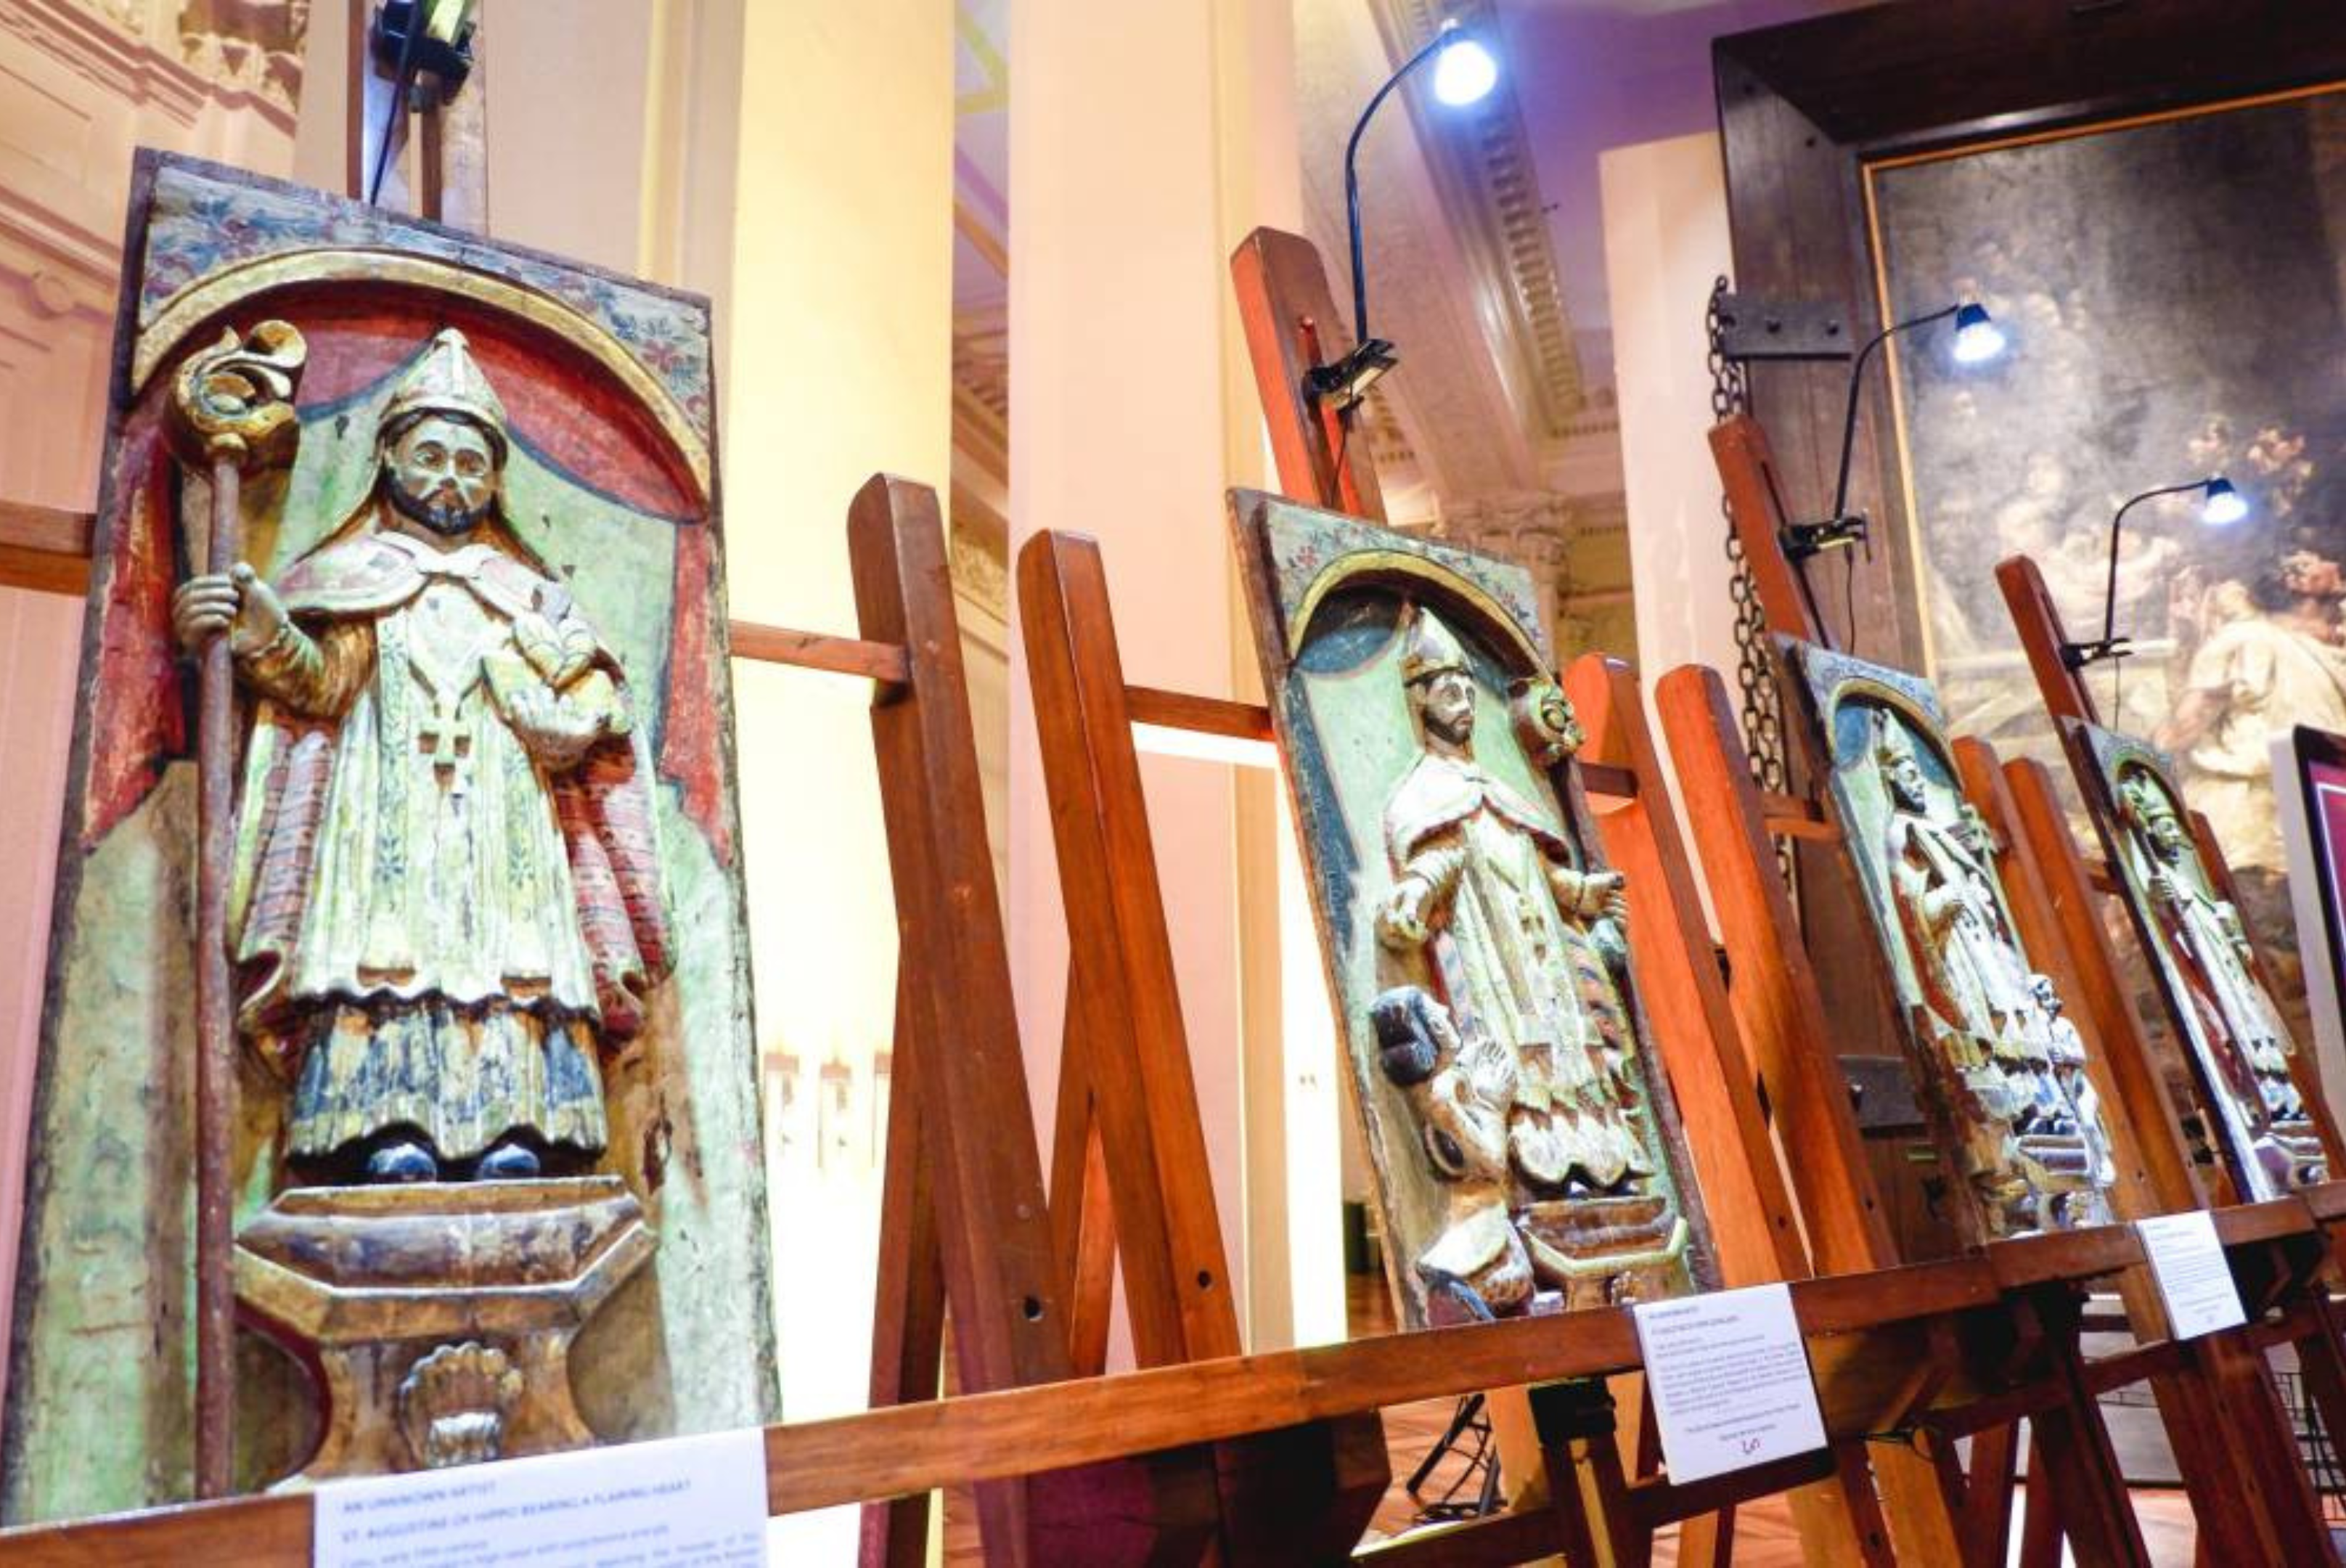 Boljoon pulpit panels donation to Nat’l Museum sparks outcry